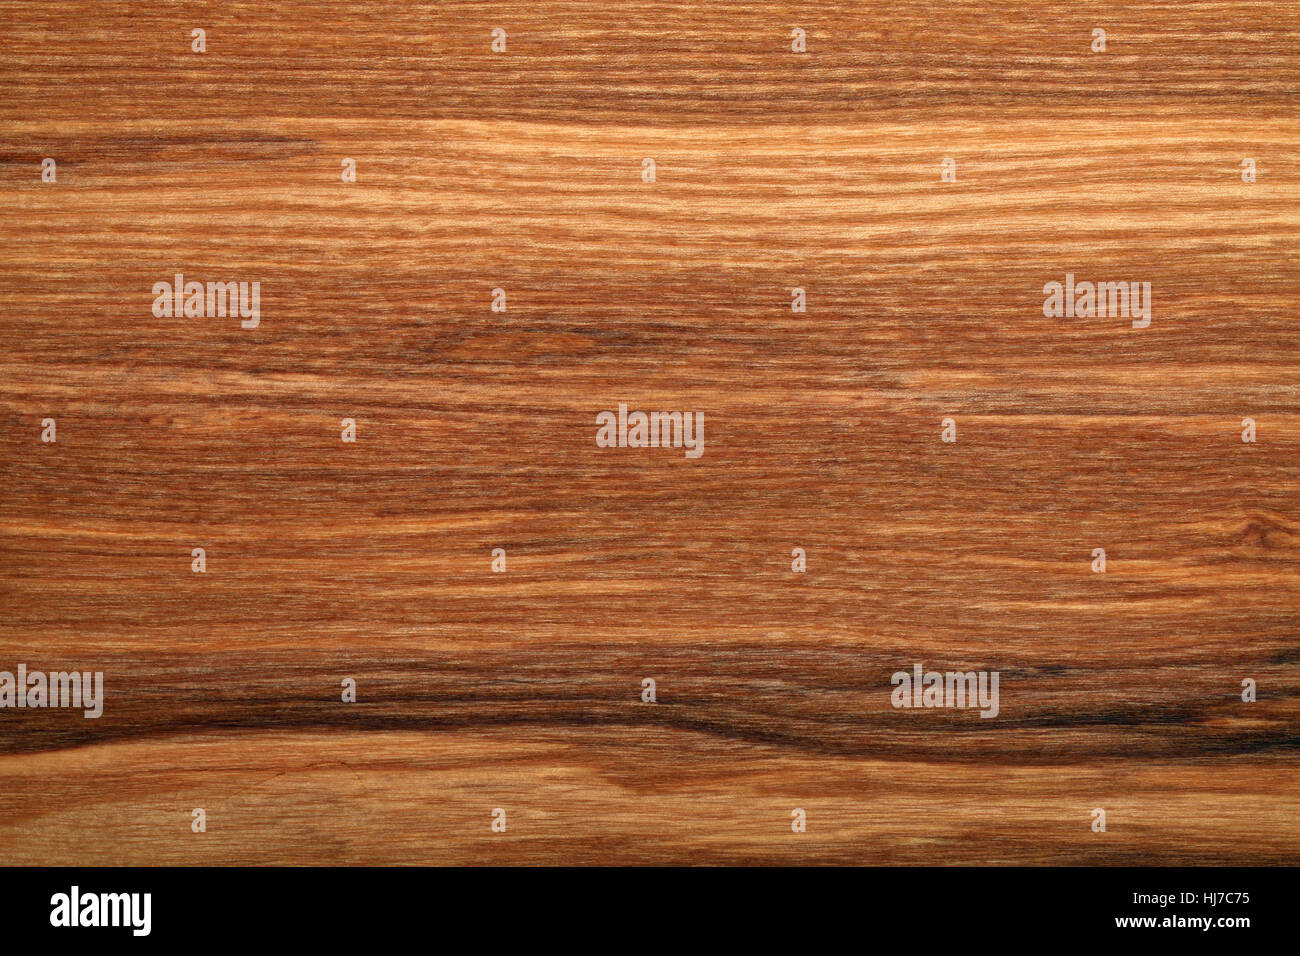 Background image. Image of colorful wood texture Stock Photo